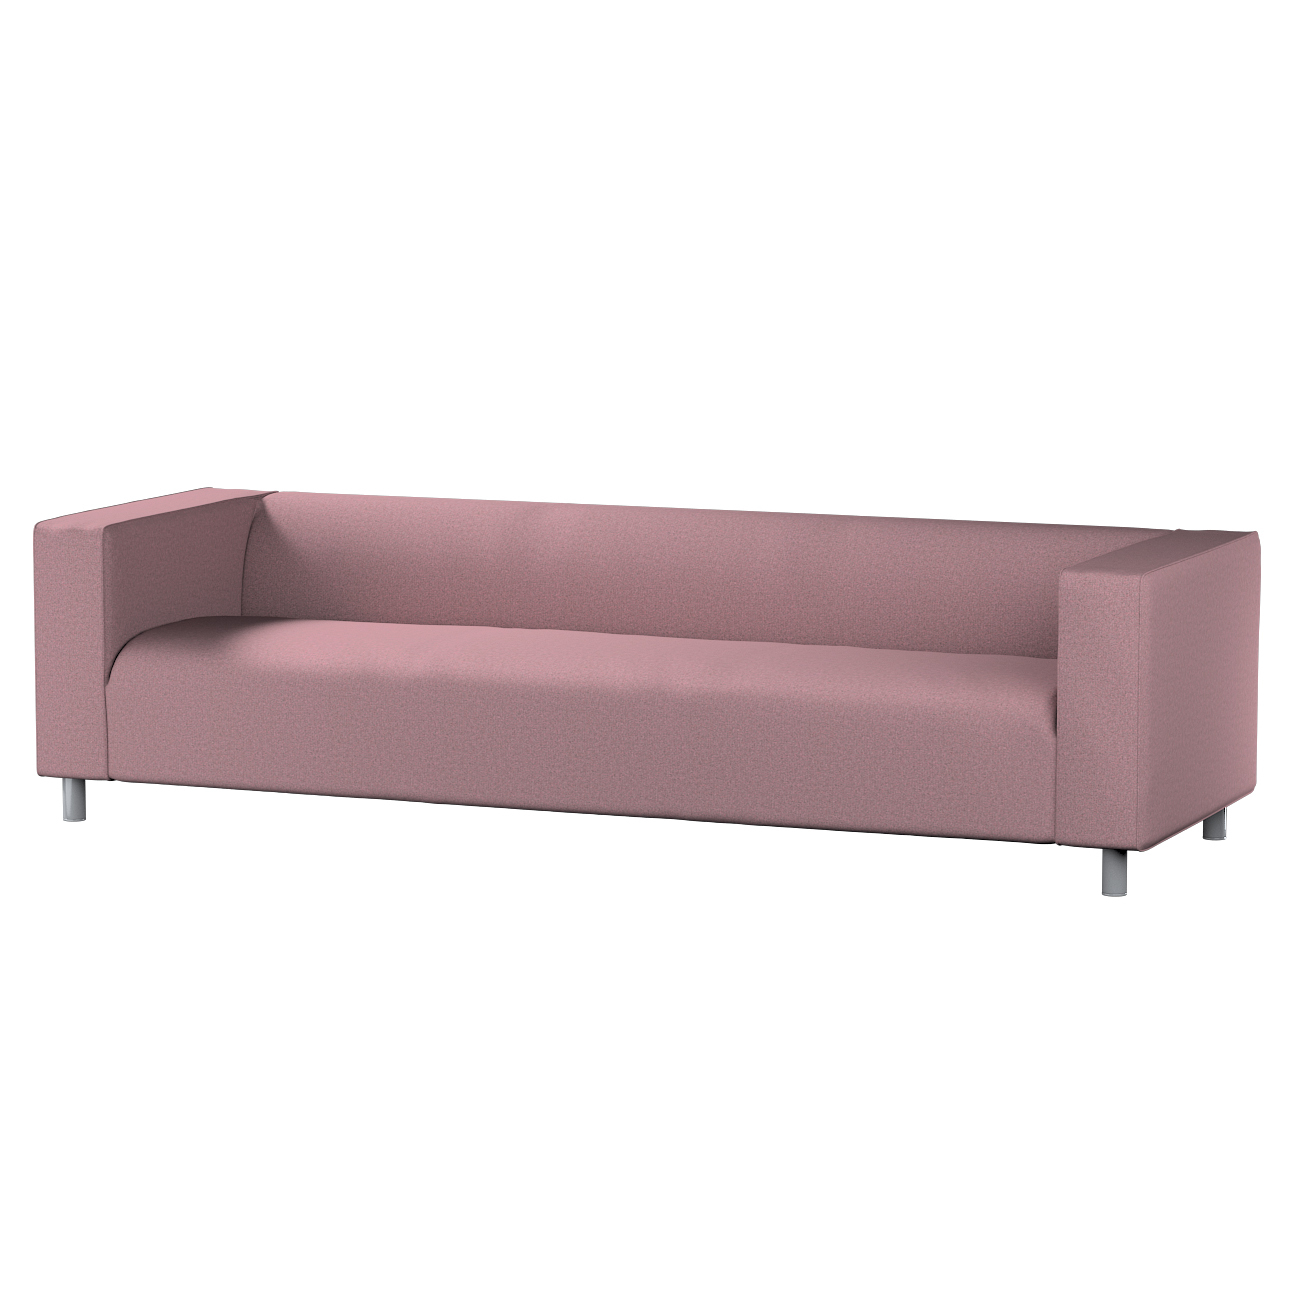 Bezug für Klippan 4-Sitzer Sofa, schwarz--rosa, Bezug für Klippan 4-Sitzer, günstig online kaufen